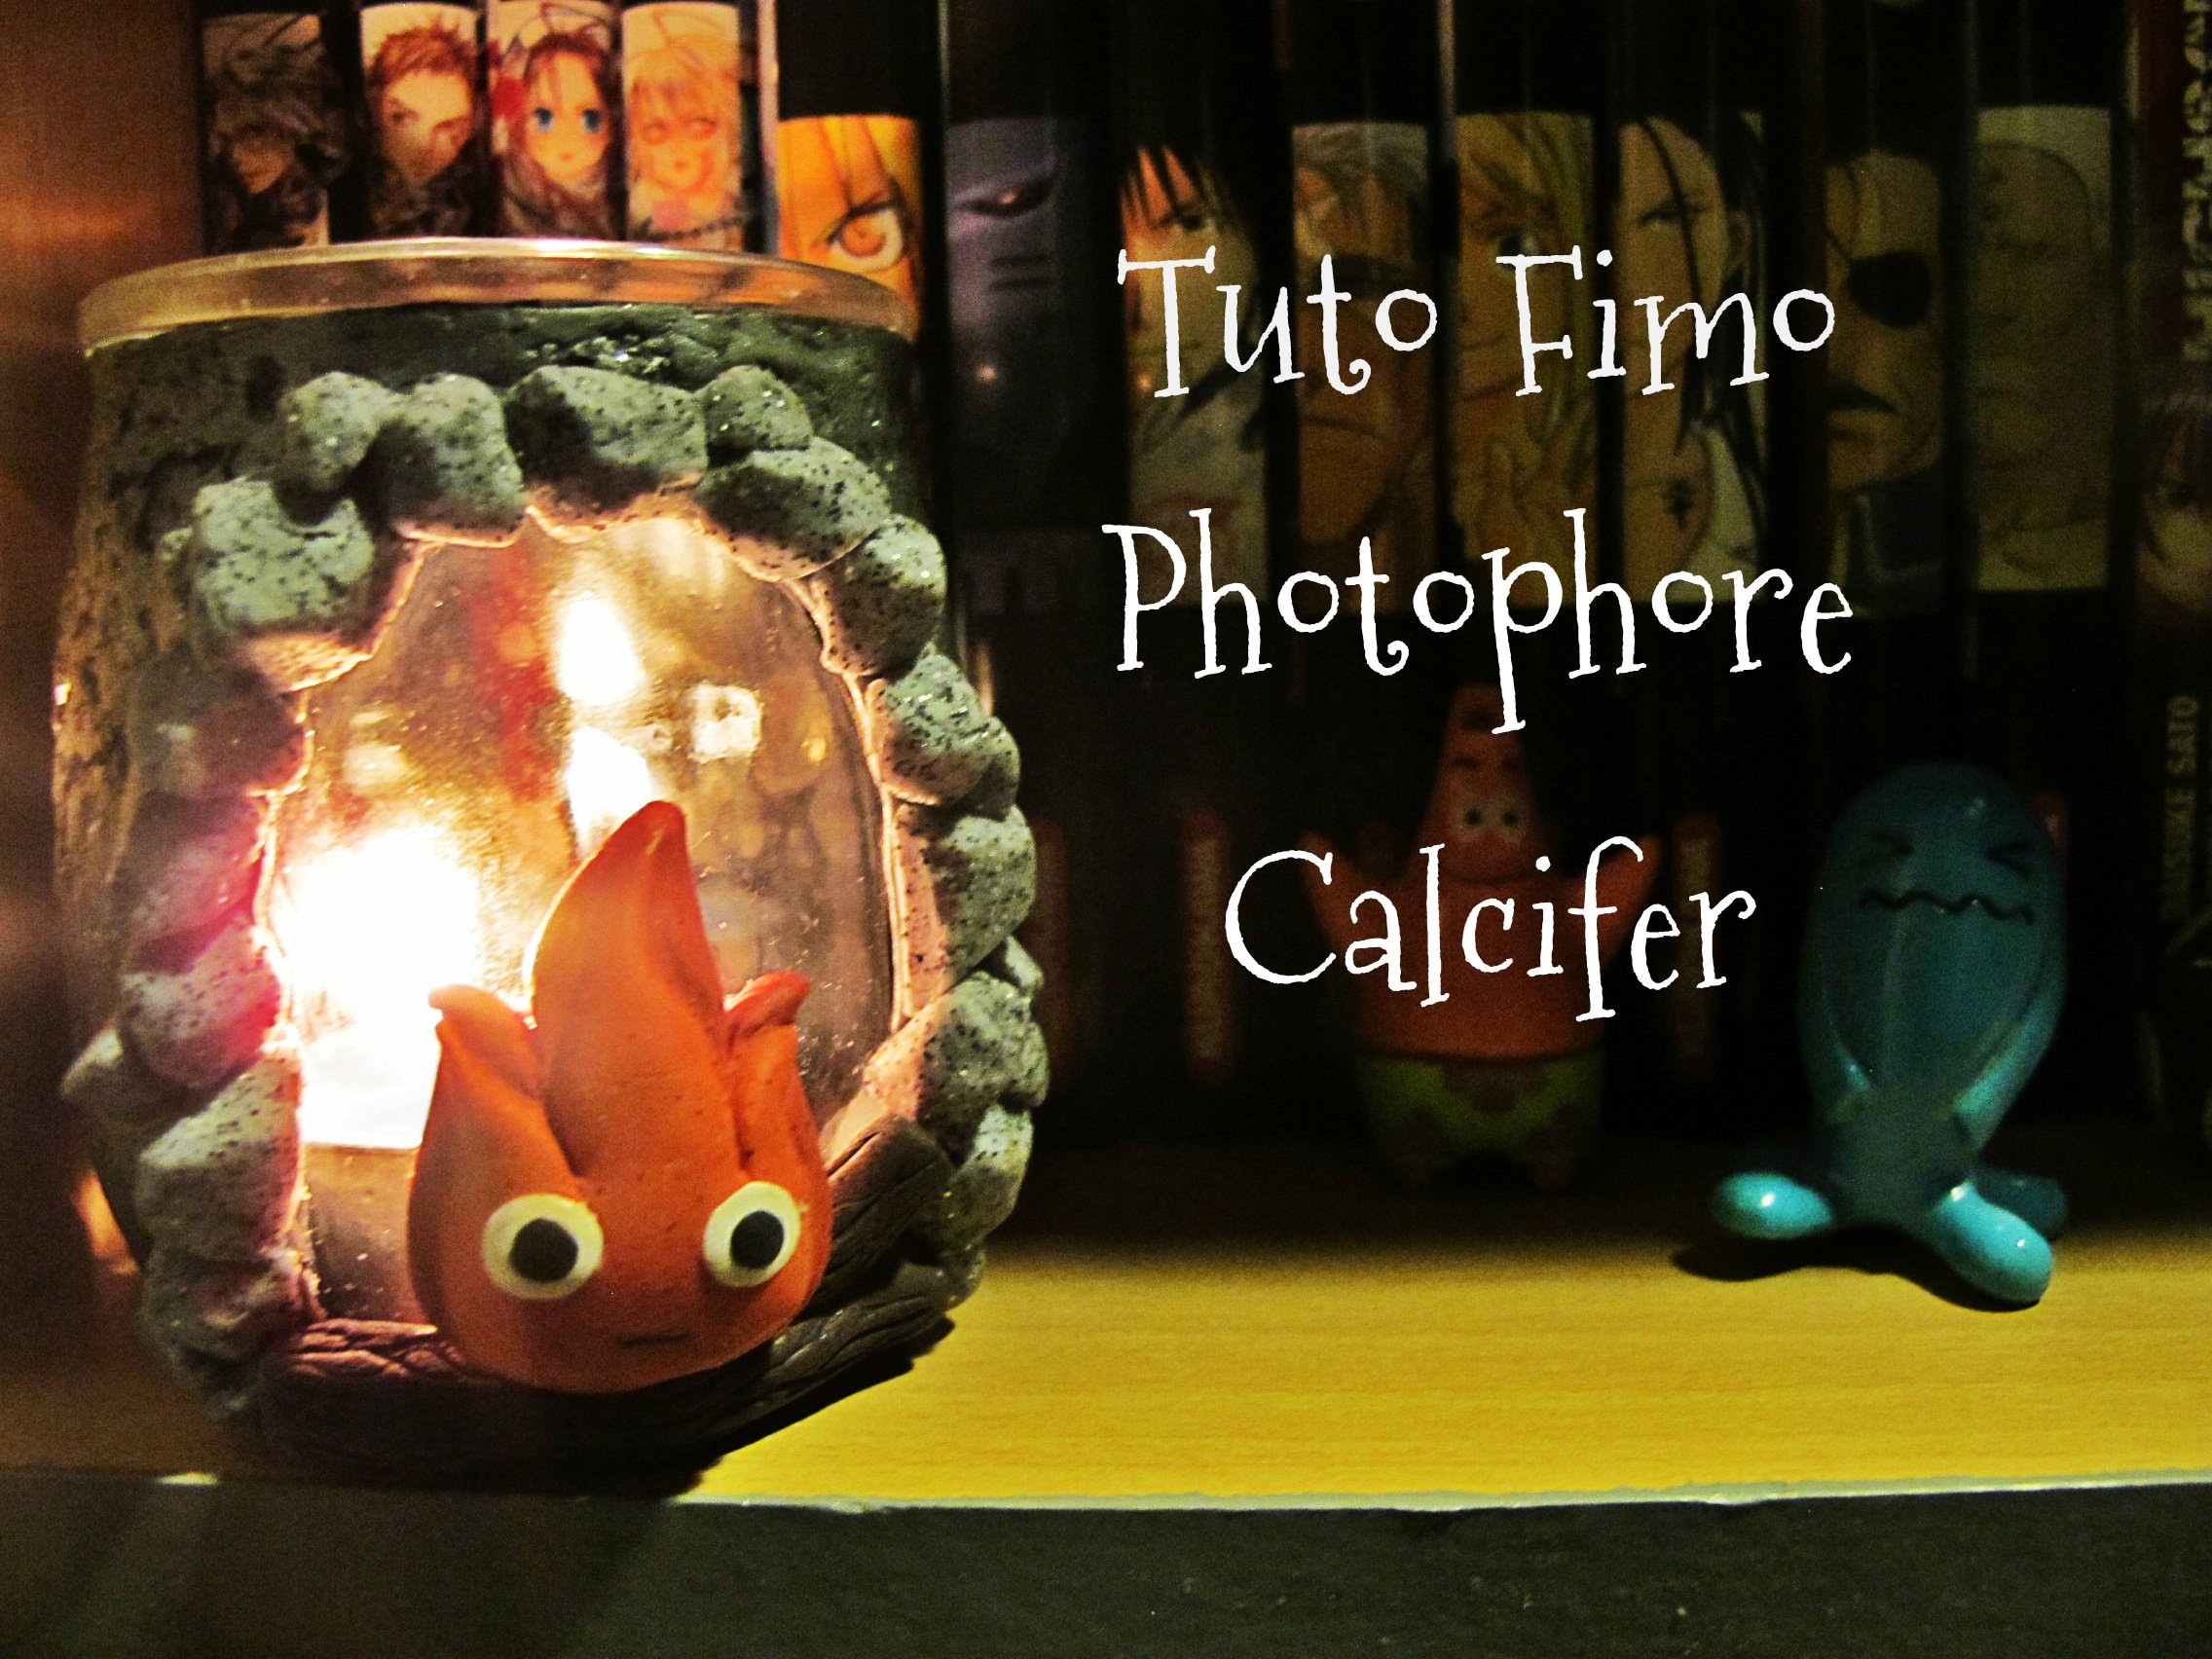 ♥ Tuto fimo bougeoir photophore Calcifer - Le chateau ambulant.Calcifer - Howl's Moving Castle ♥